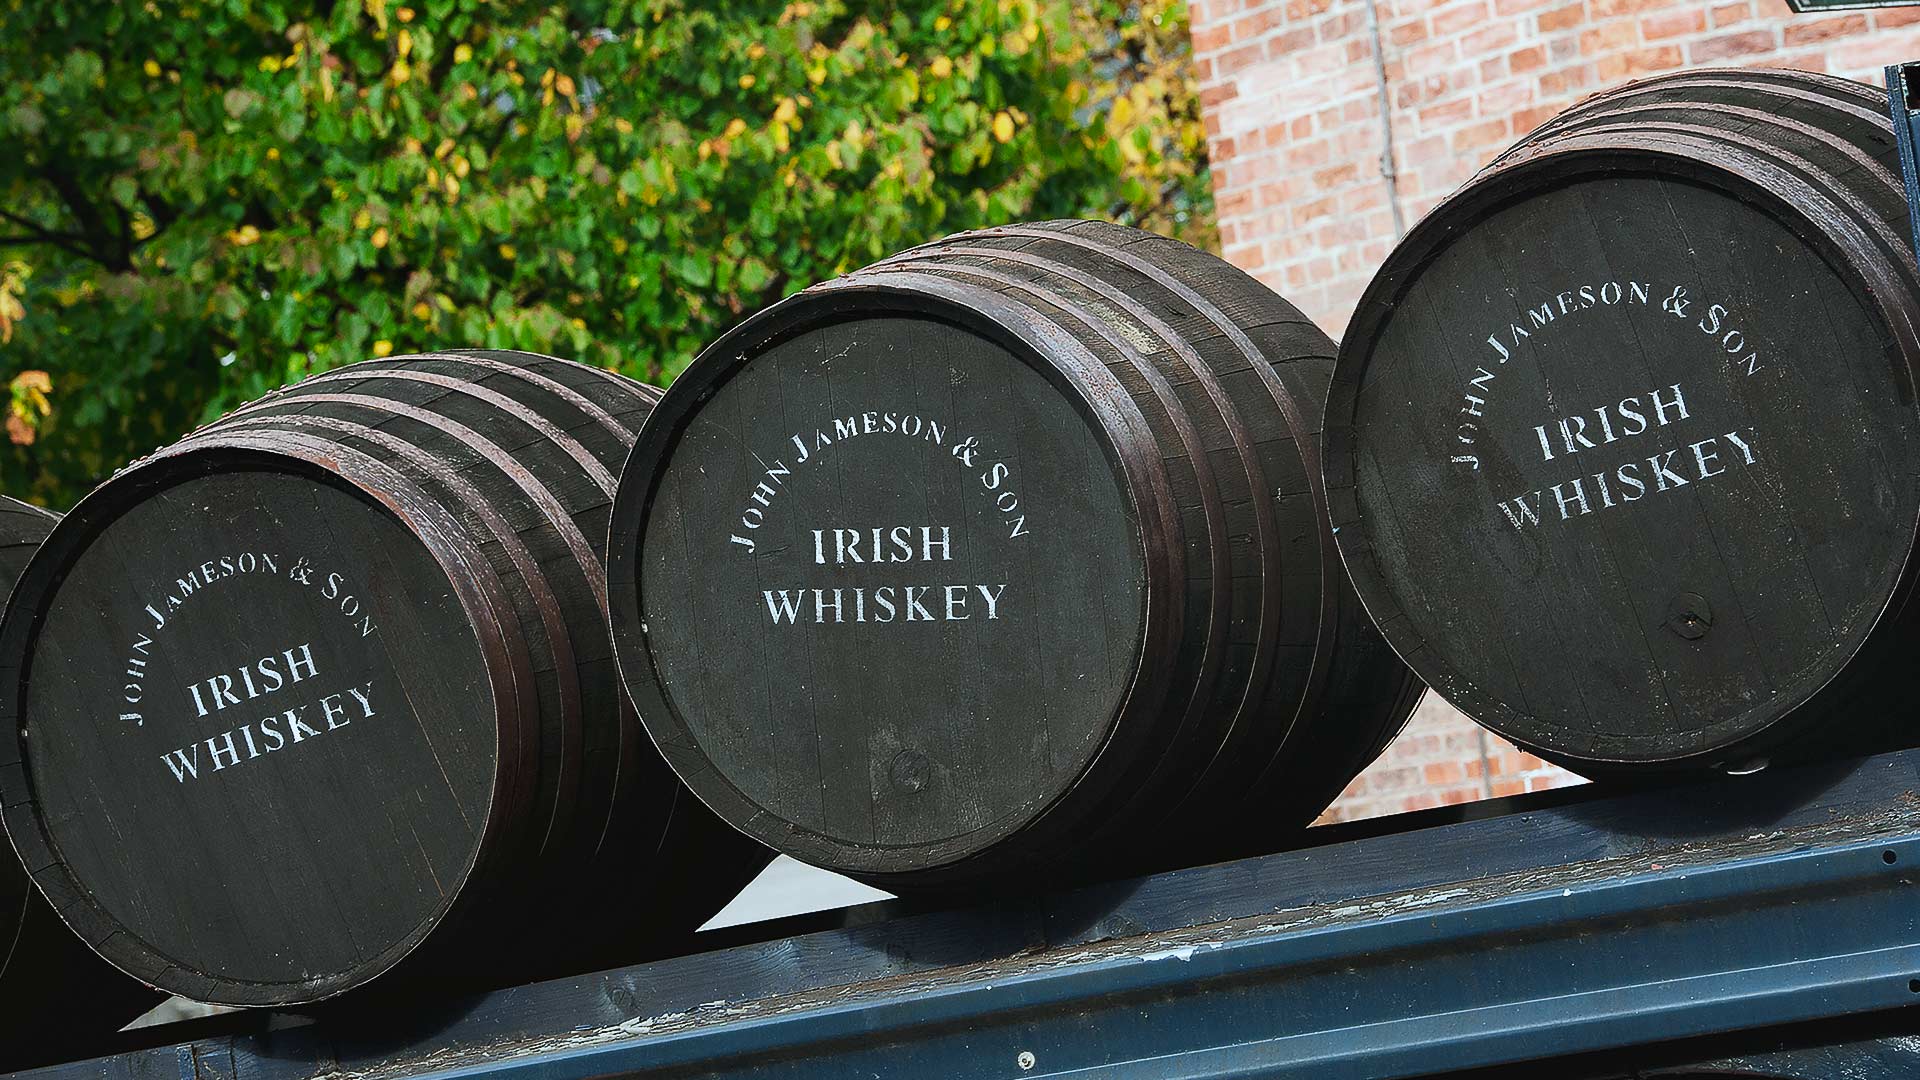 Irish Whiskey barrels at the Jameson Distillery Cork